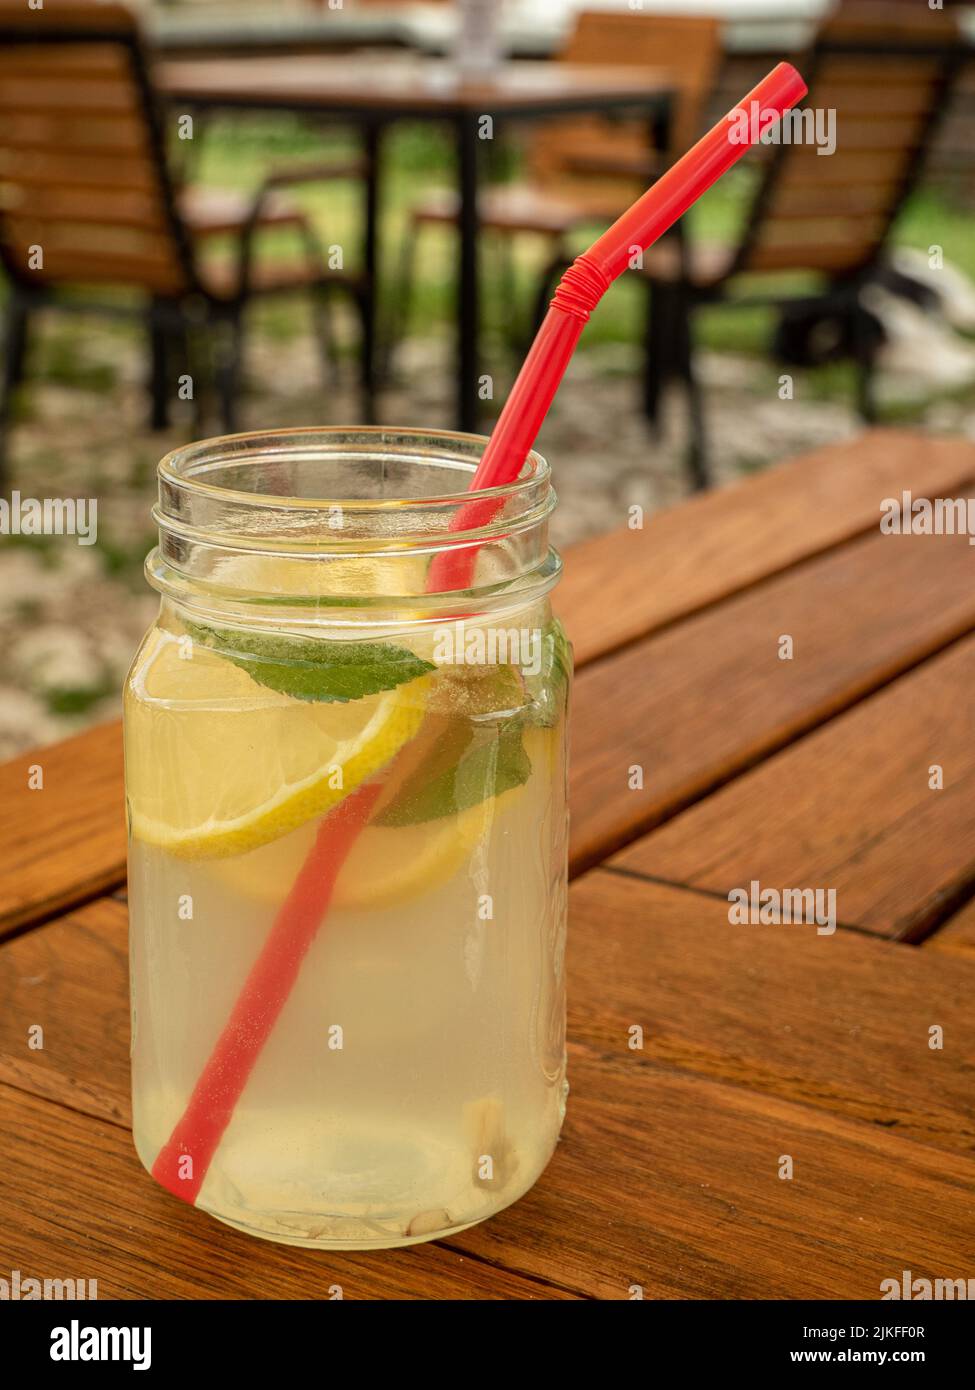 jar with homemade refreshing summer lemonade drink on table Stock Photo